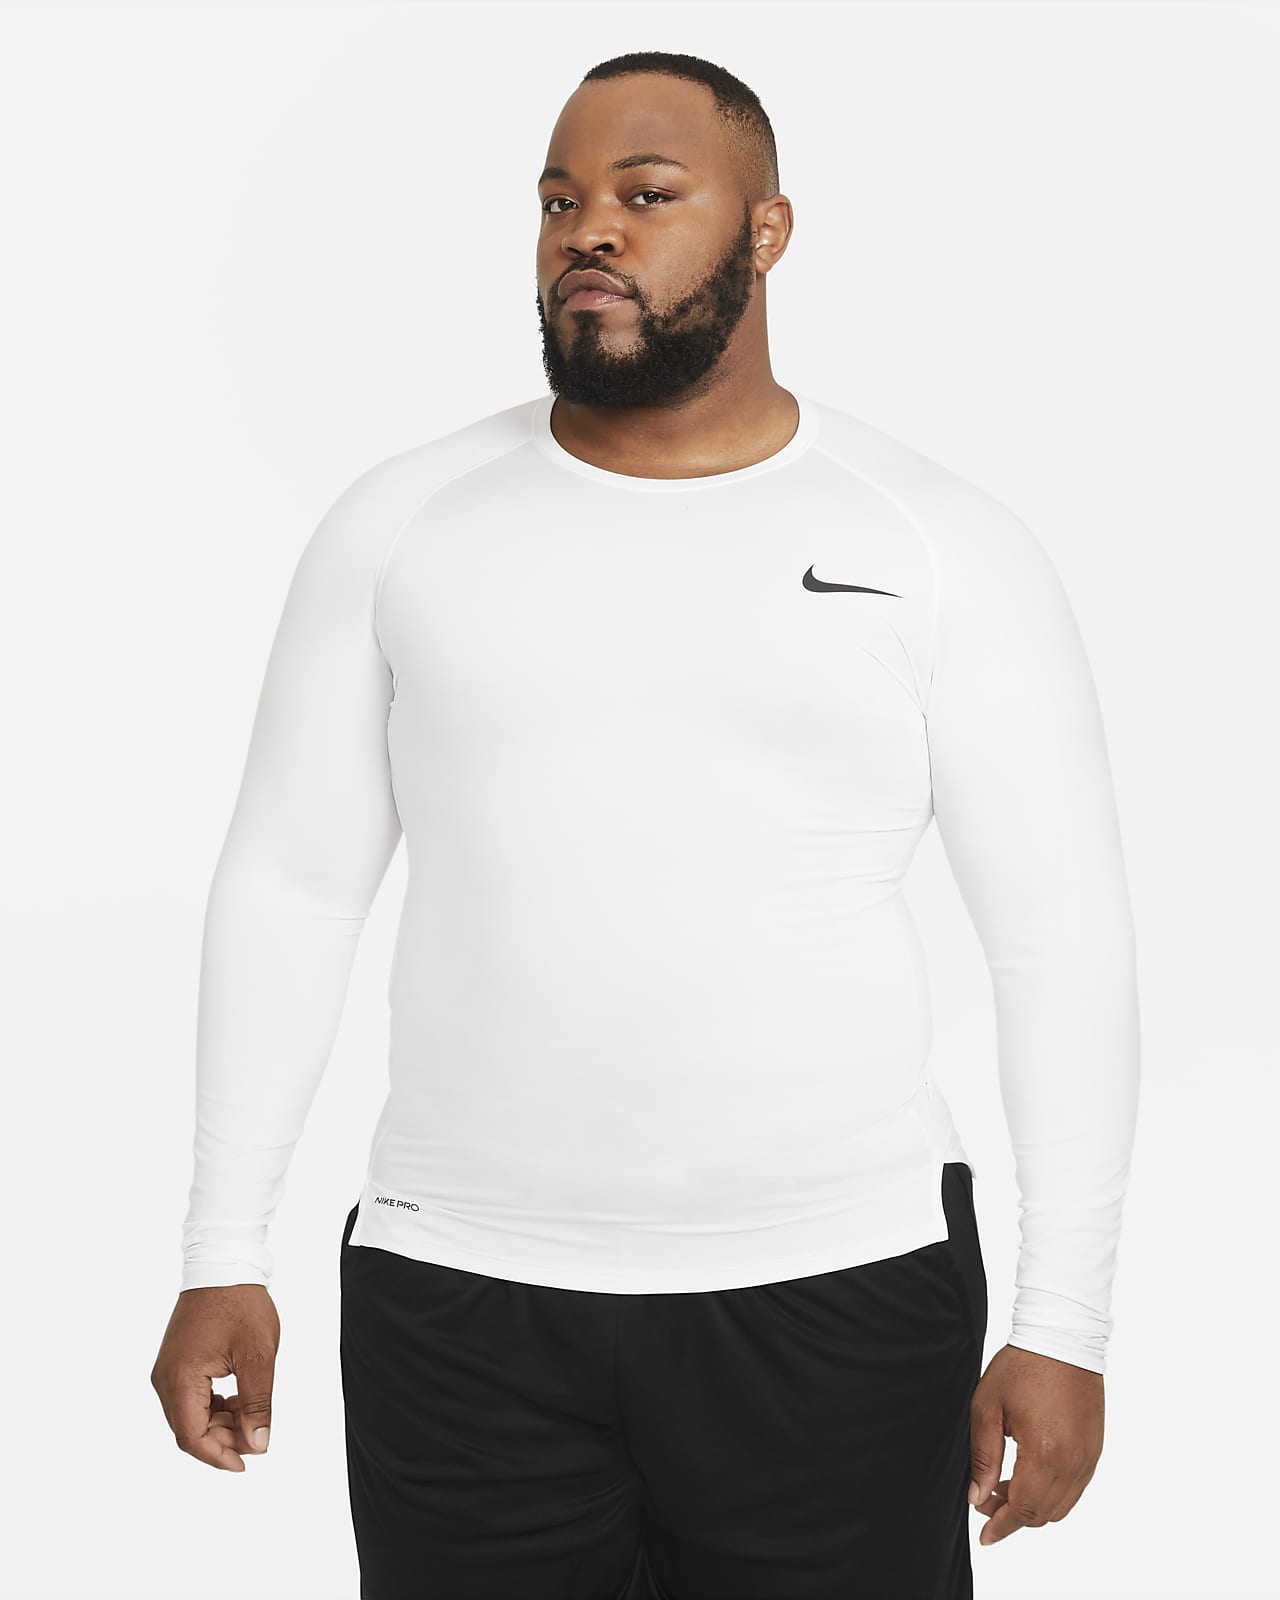 bombilla Cabeza lazo Nike Pro Men's Tight Fit Long-Sleeve Top. Nike.com